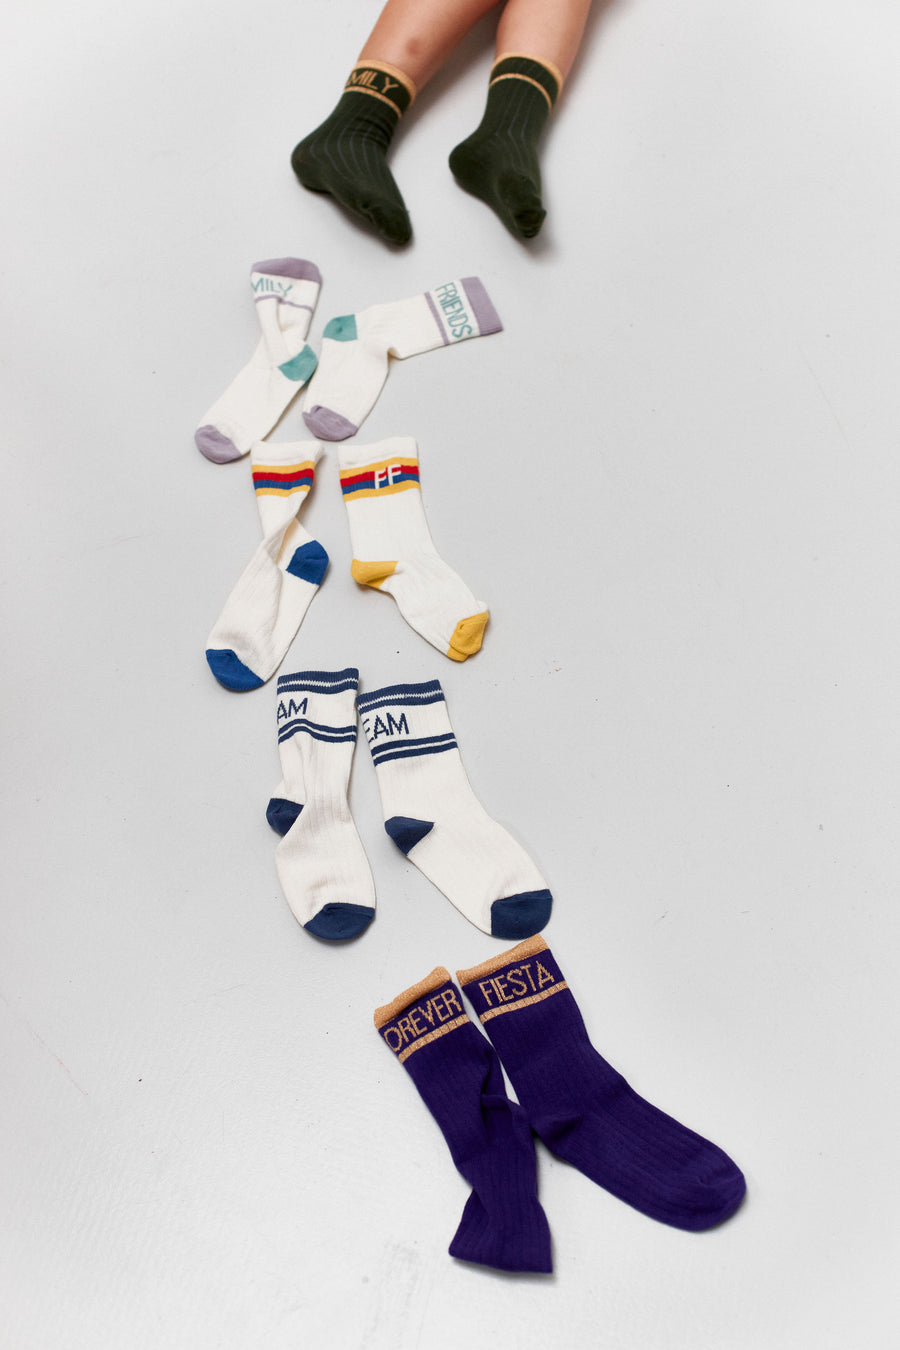 Chaussettes Georgette ##2299I - Tricolores